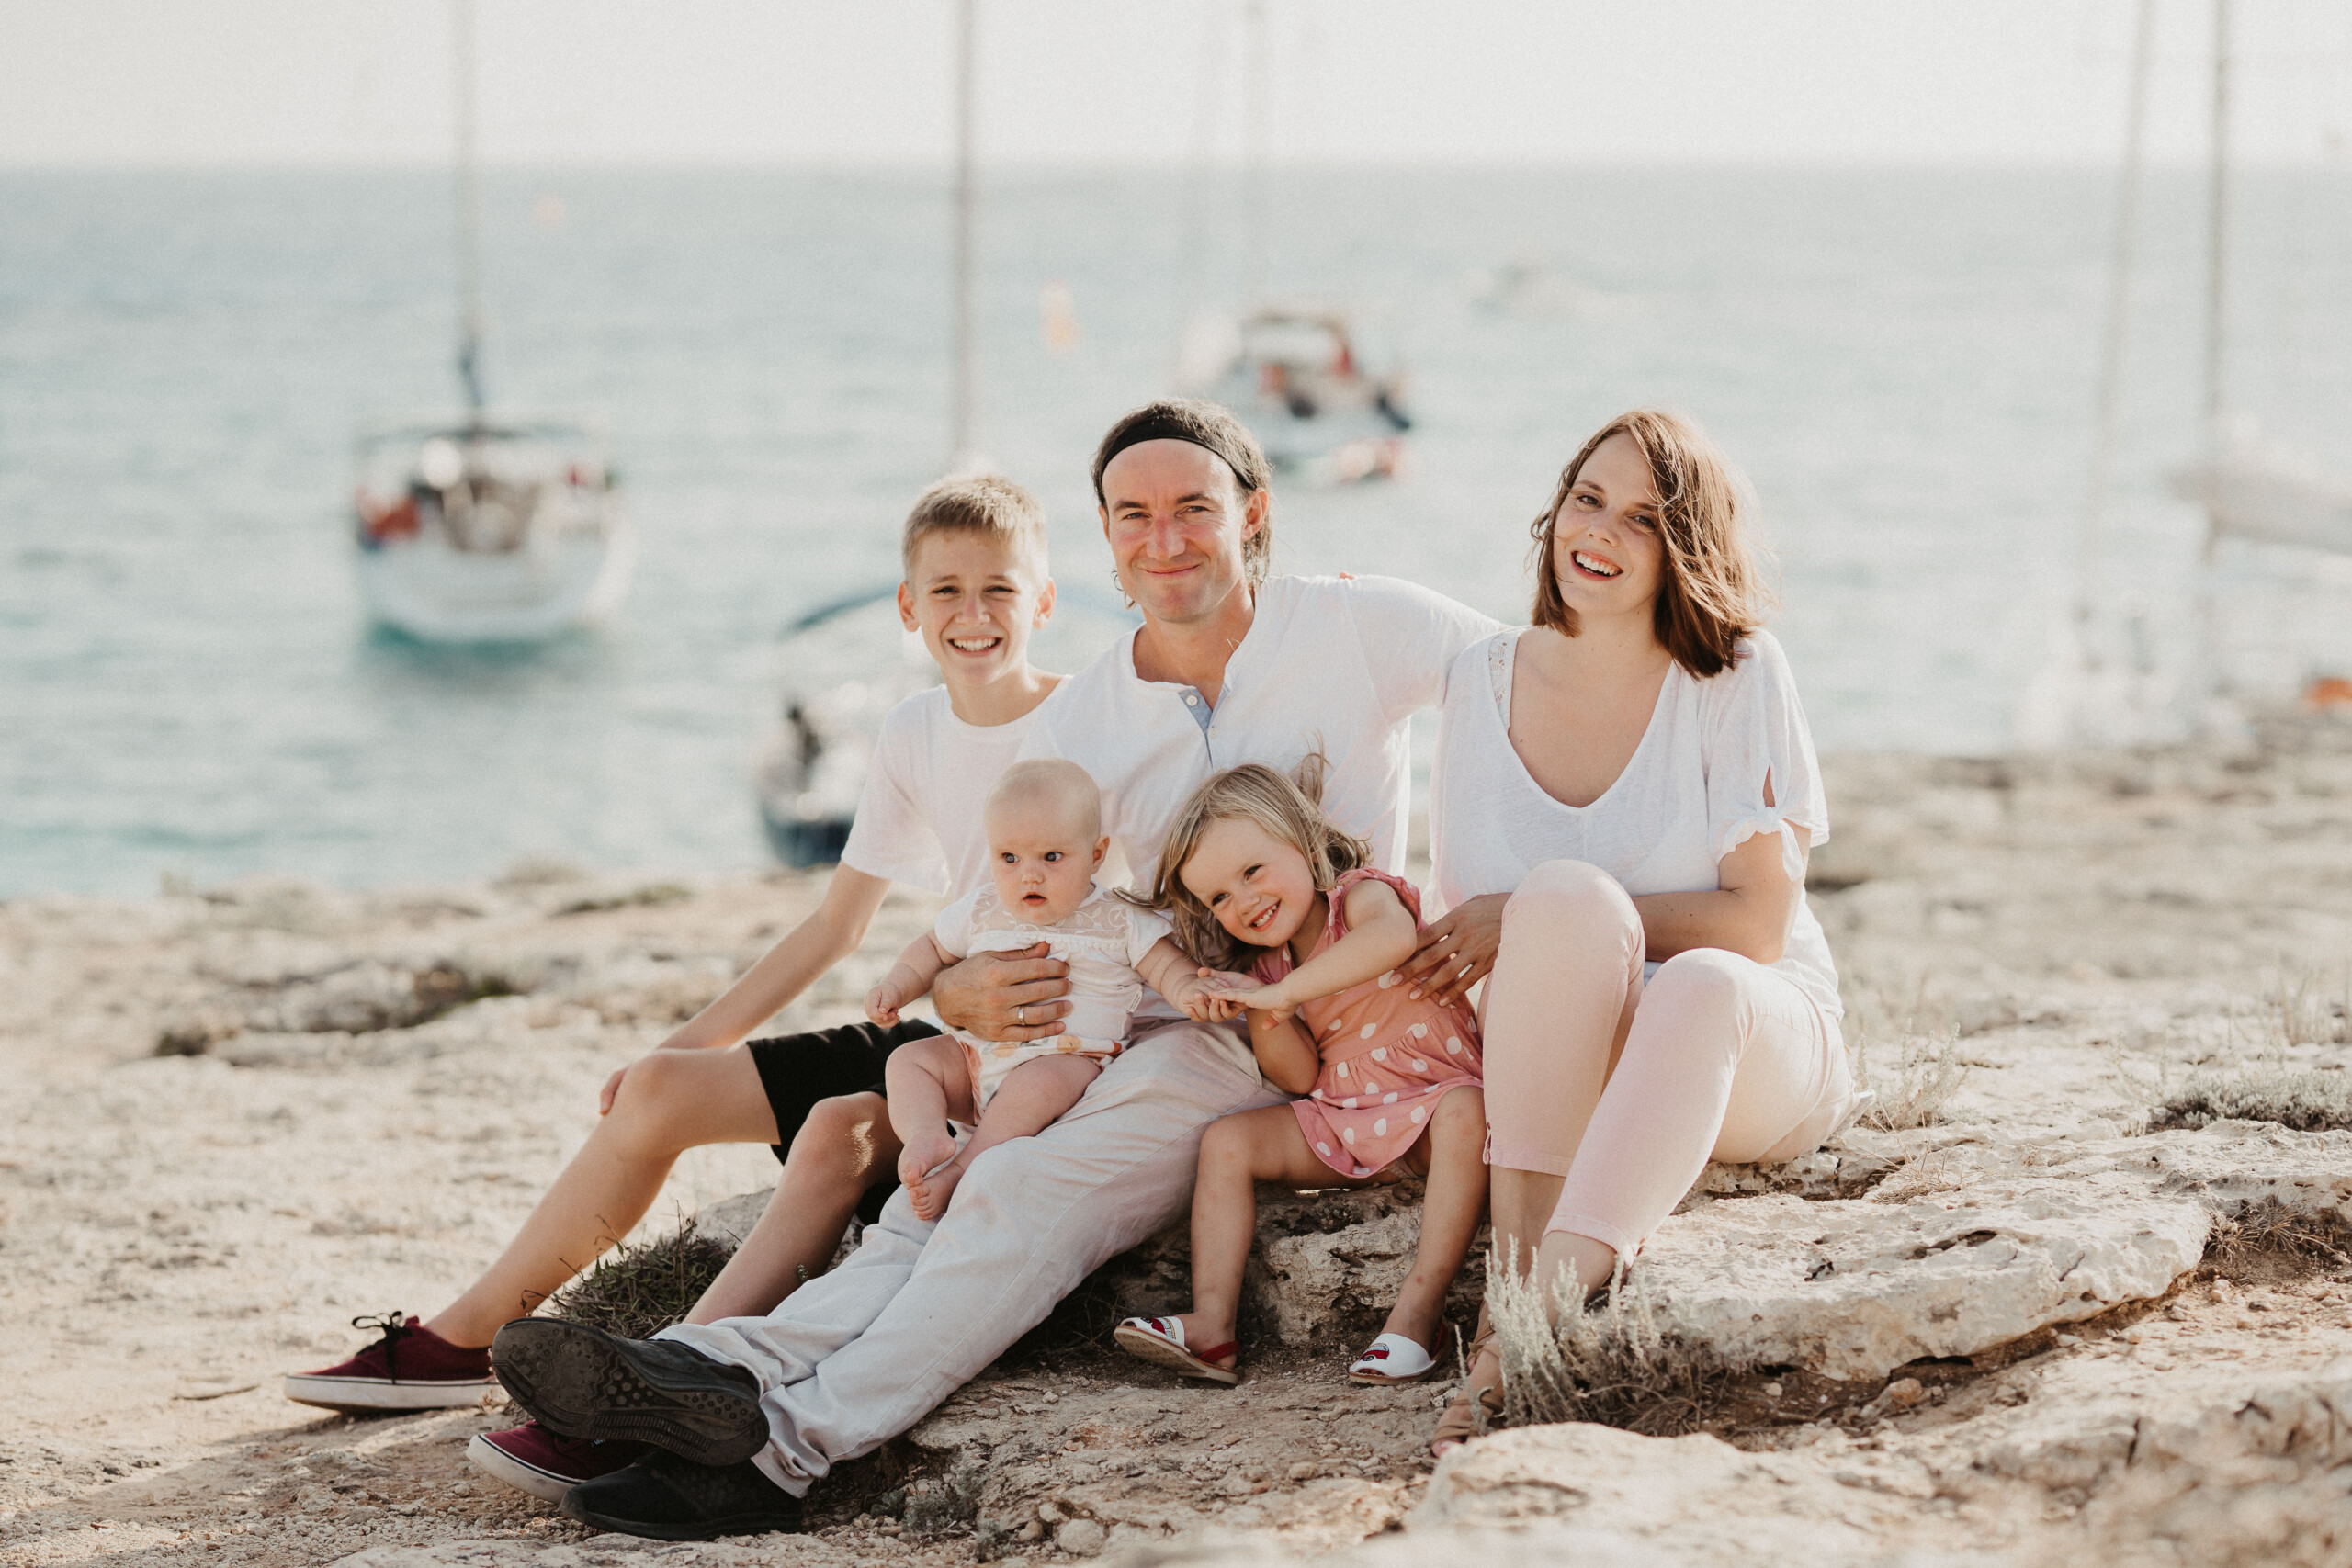 Family photoshoot by Laura, Localgrapher in Menorca